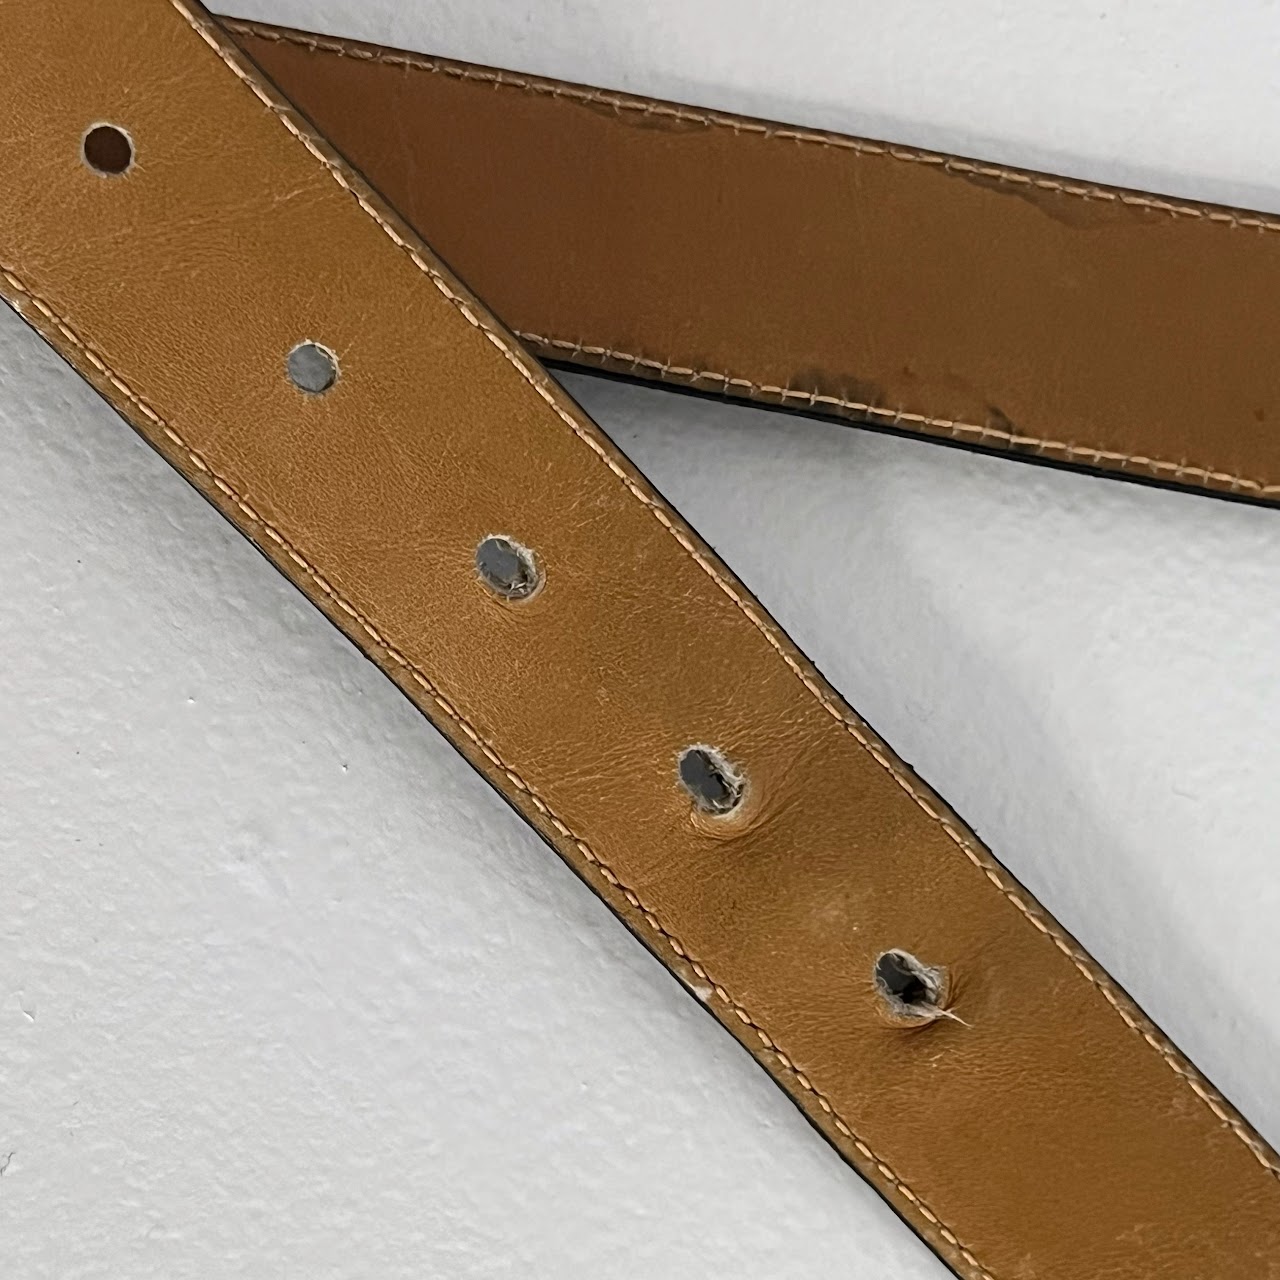 Gucci Vintage GG Buckle Leather Belt